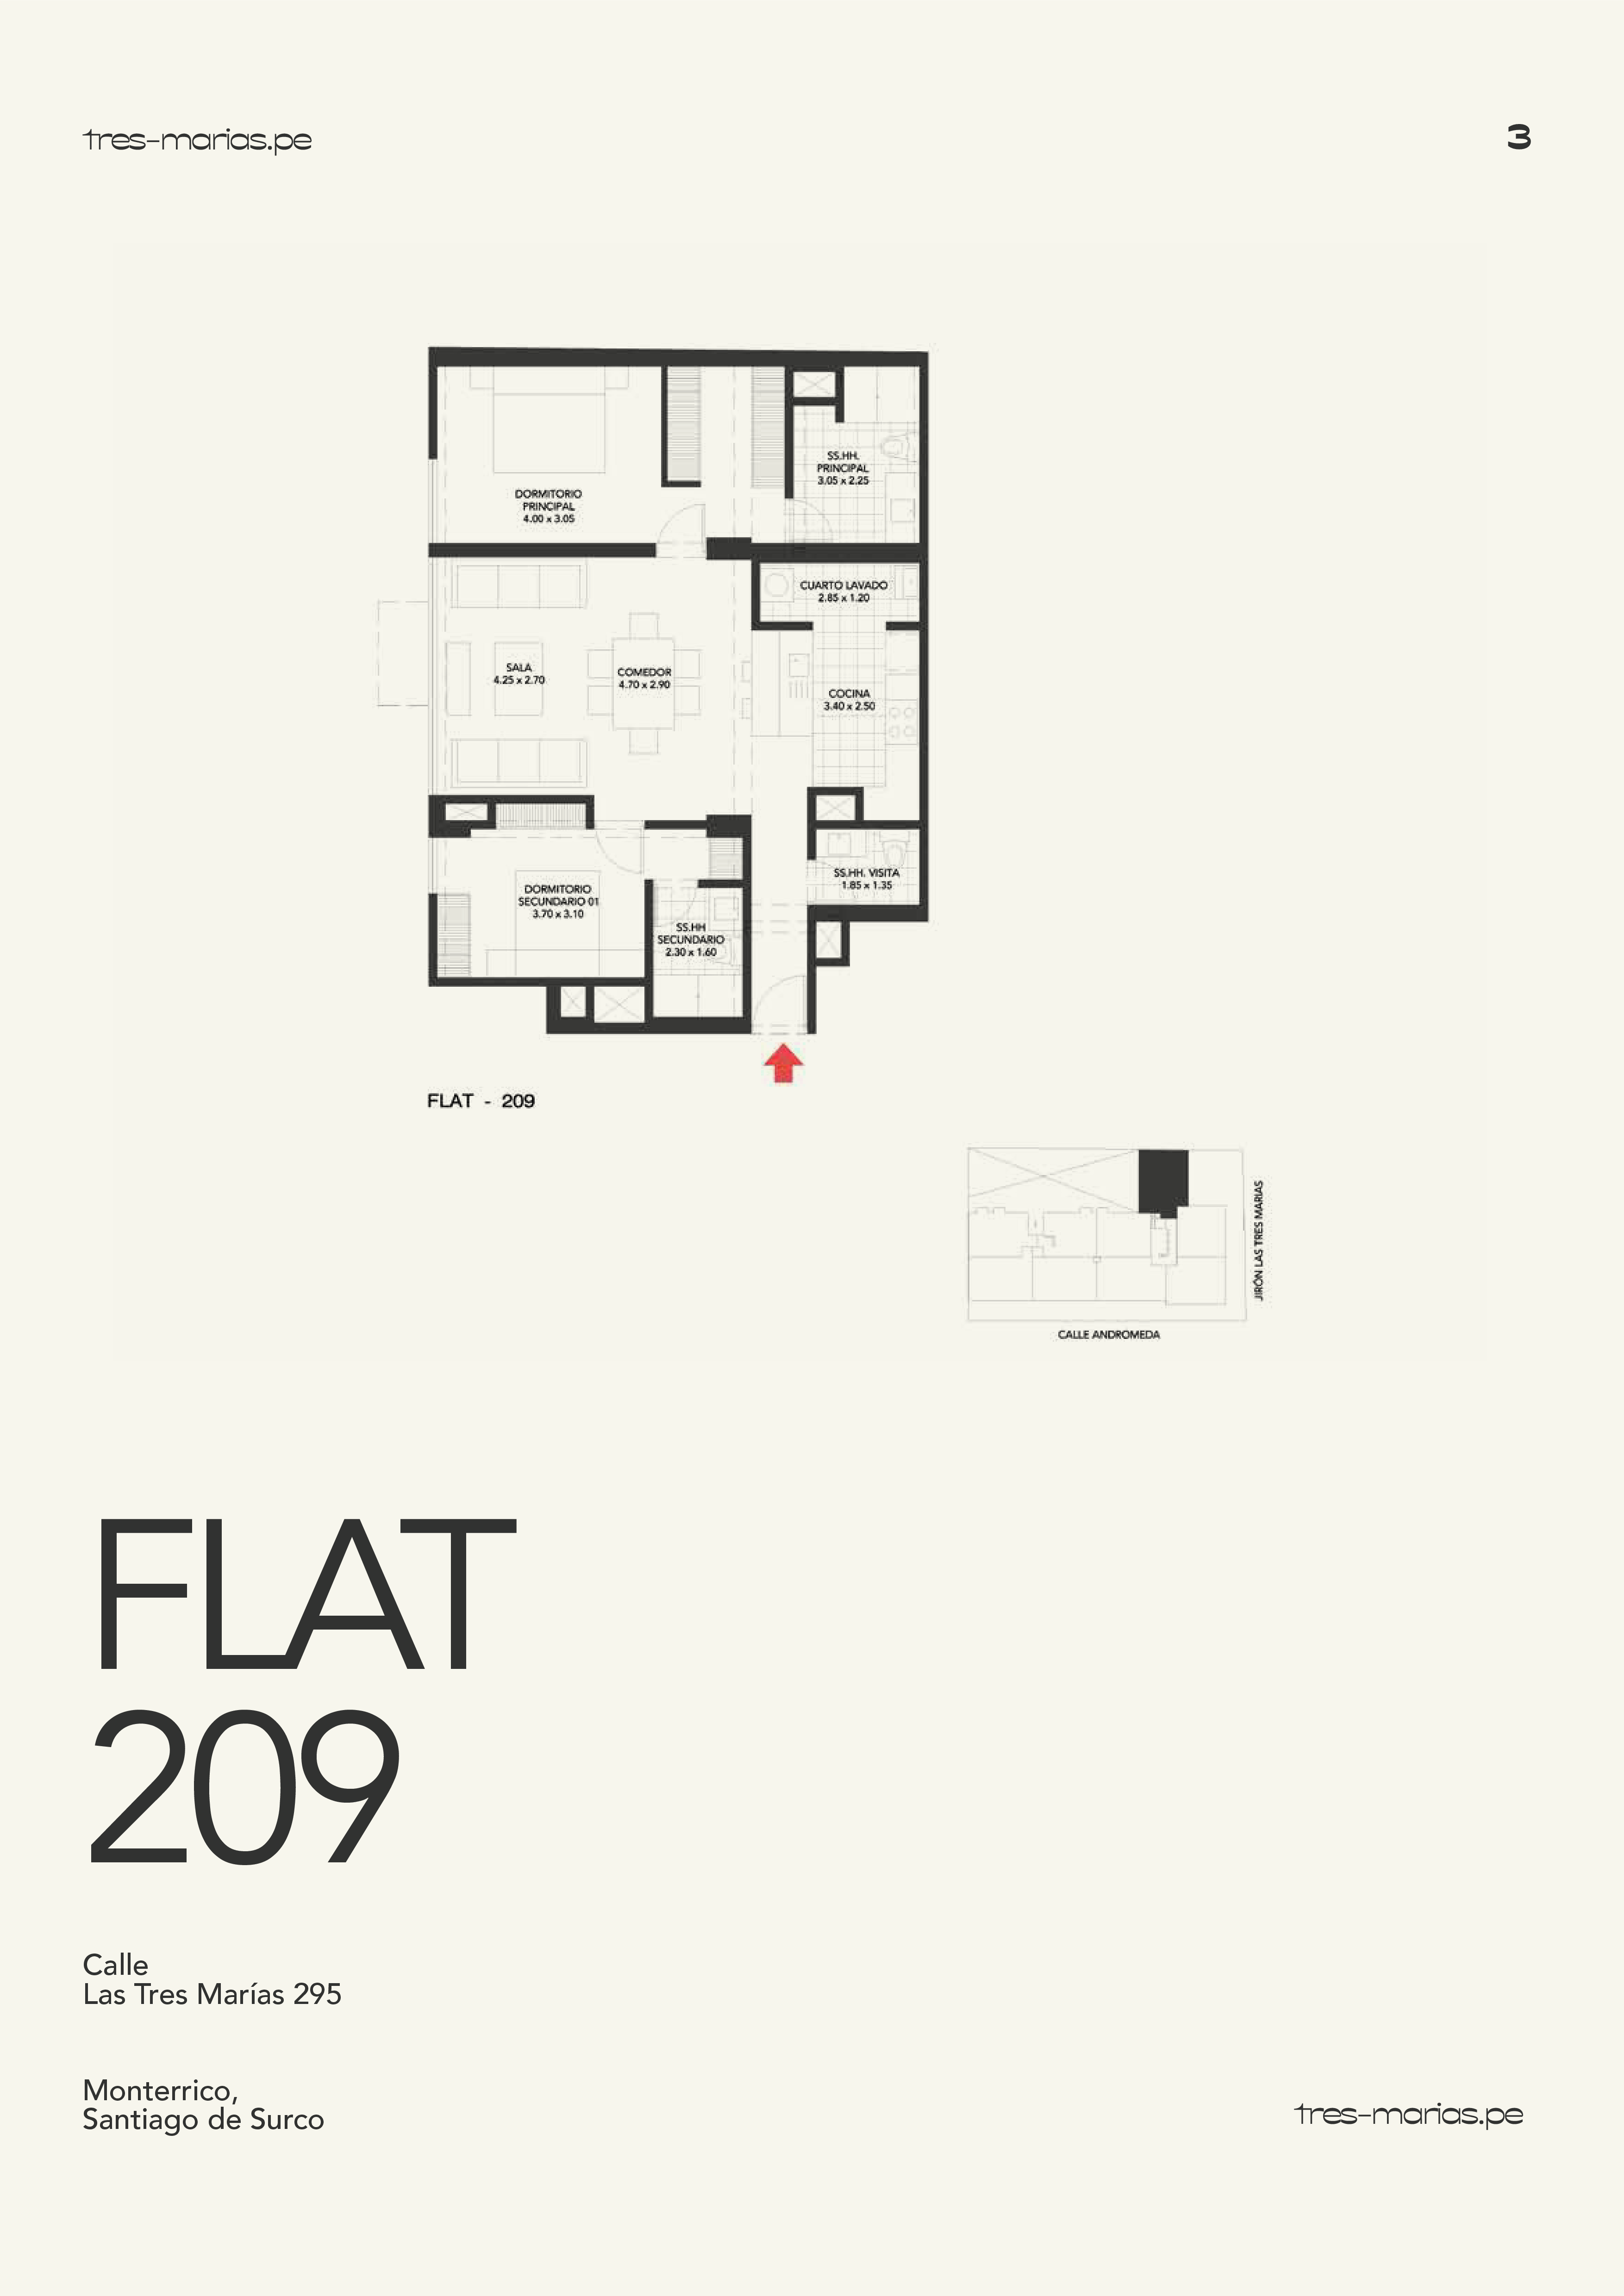 Flat 209